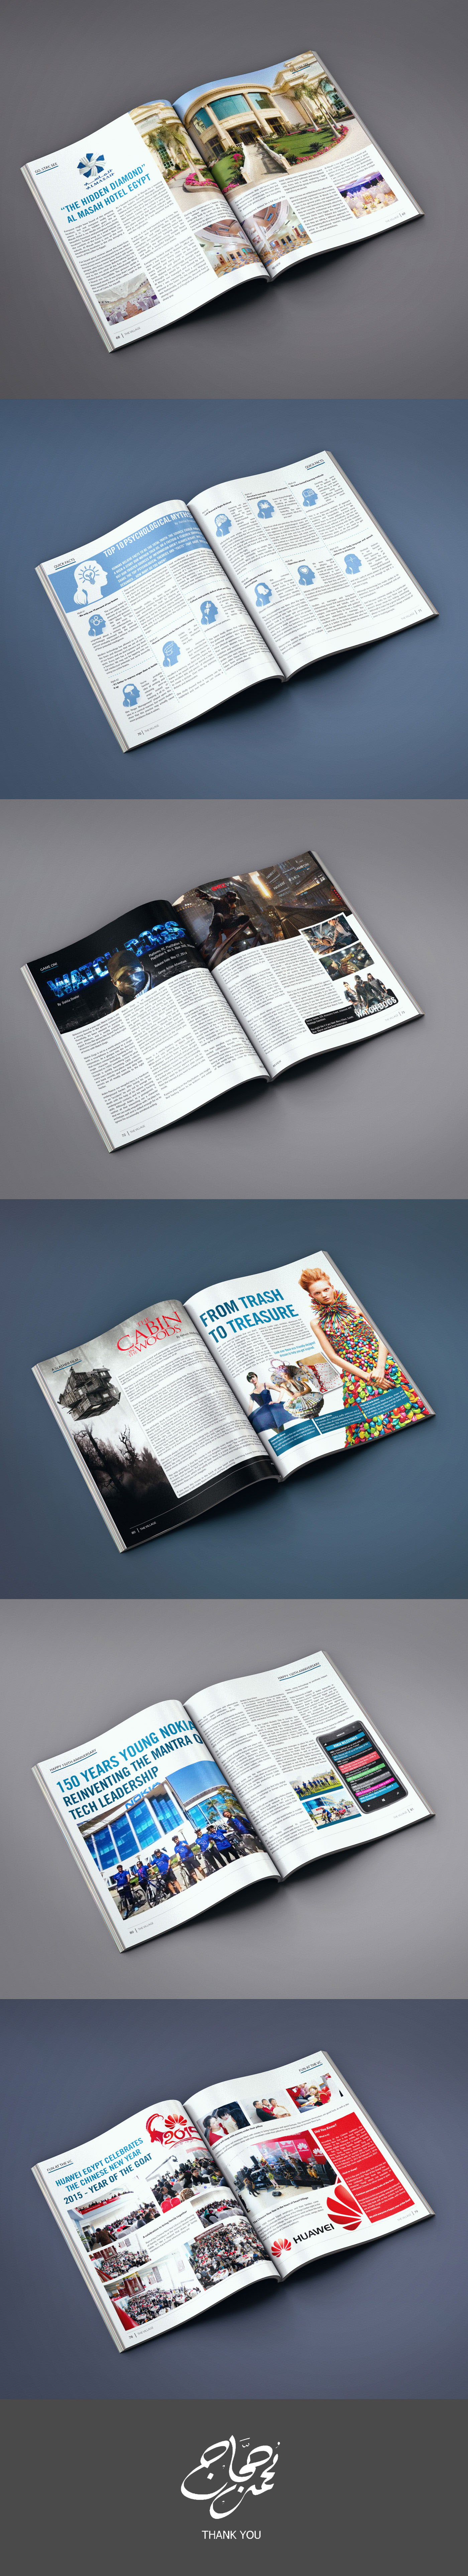 magazine Smart village egypt Layout design